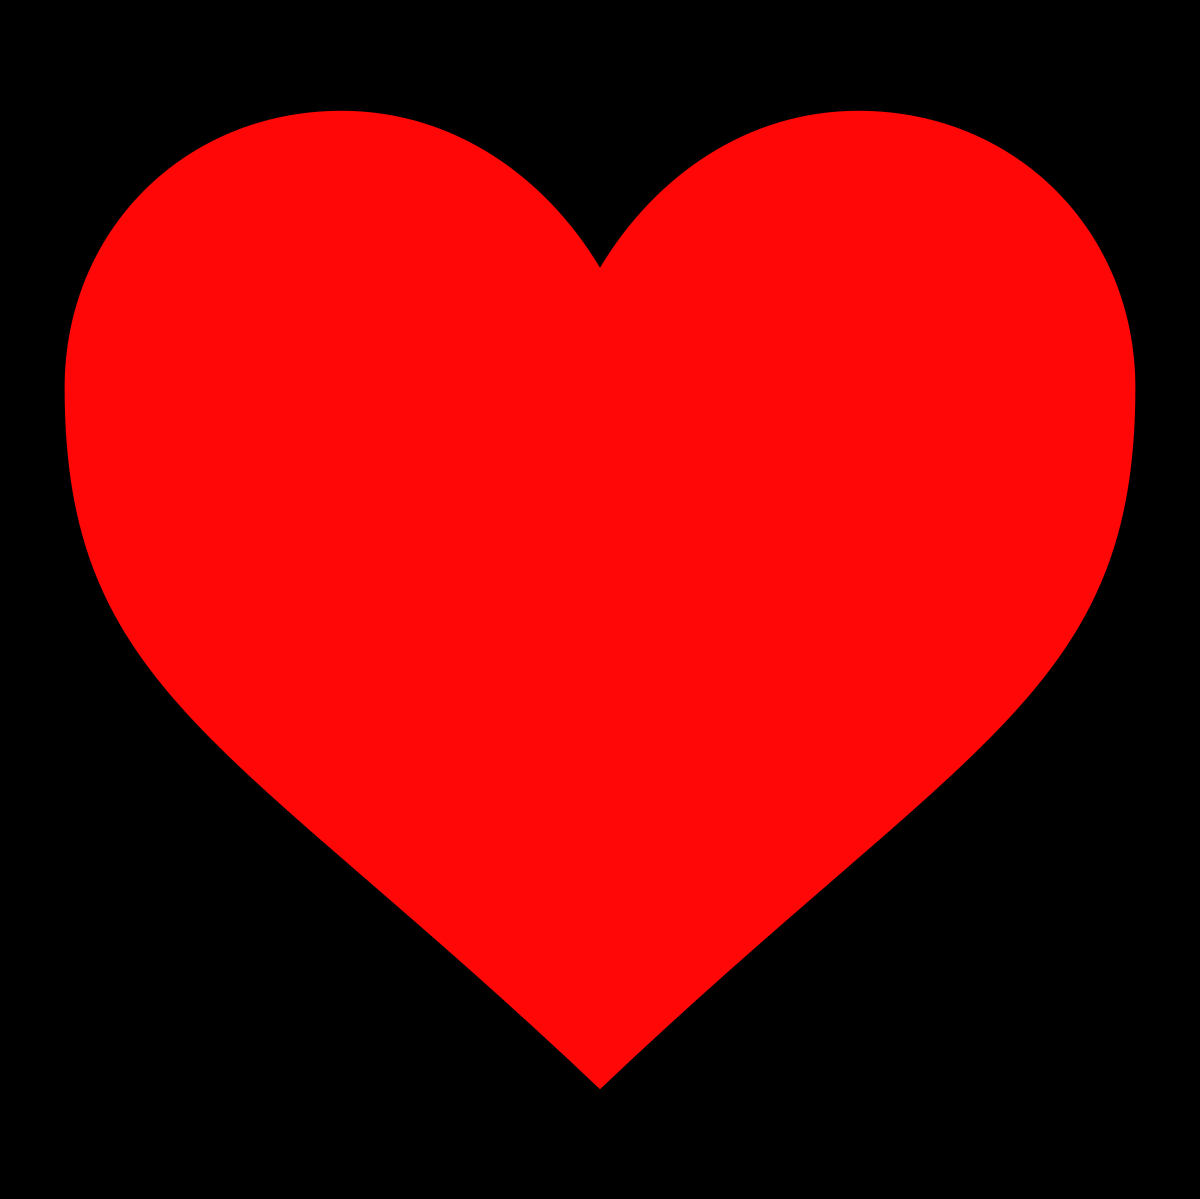 Heart symbol   Wikipedia